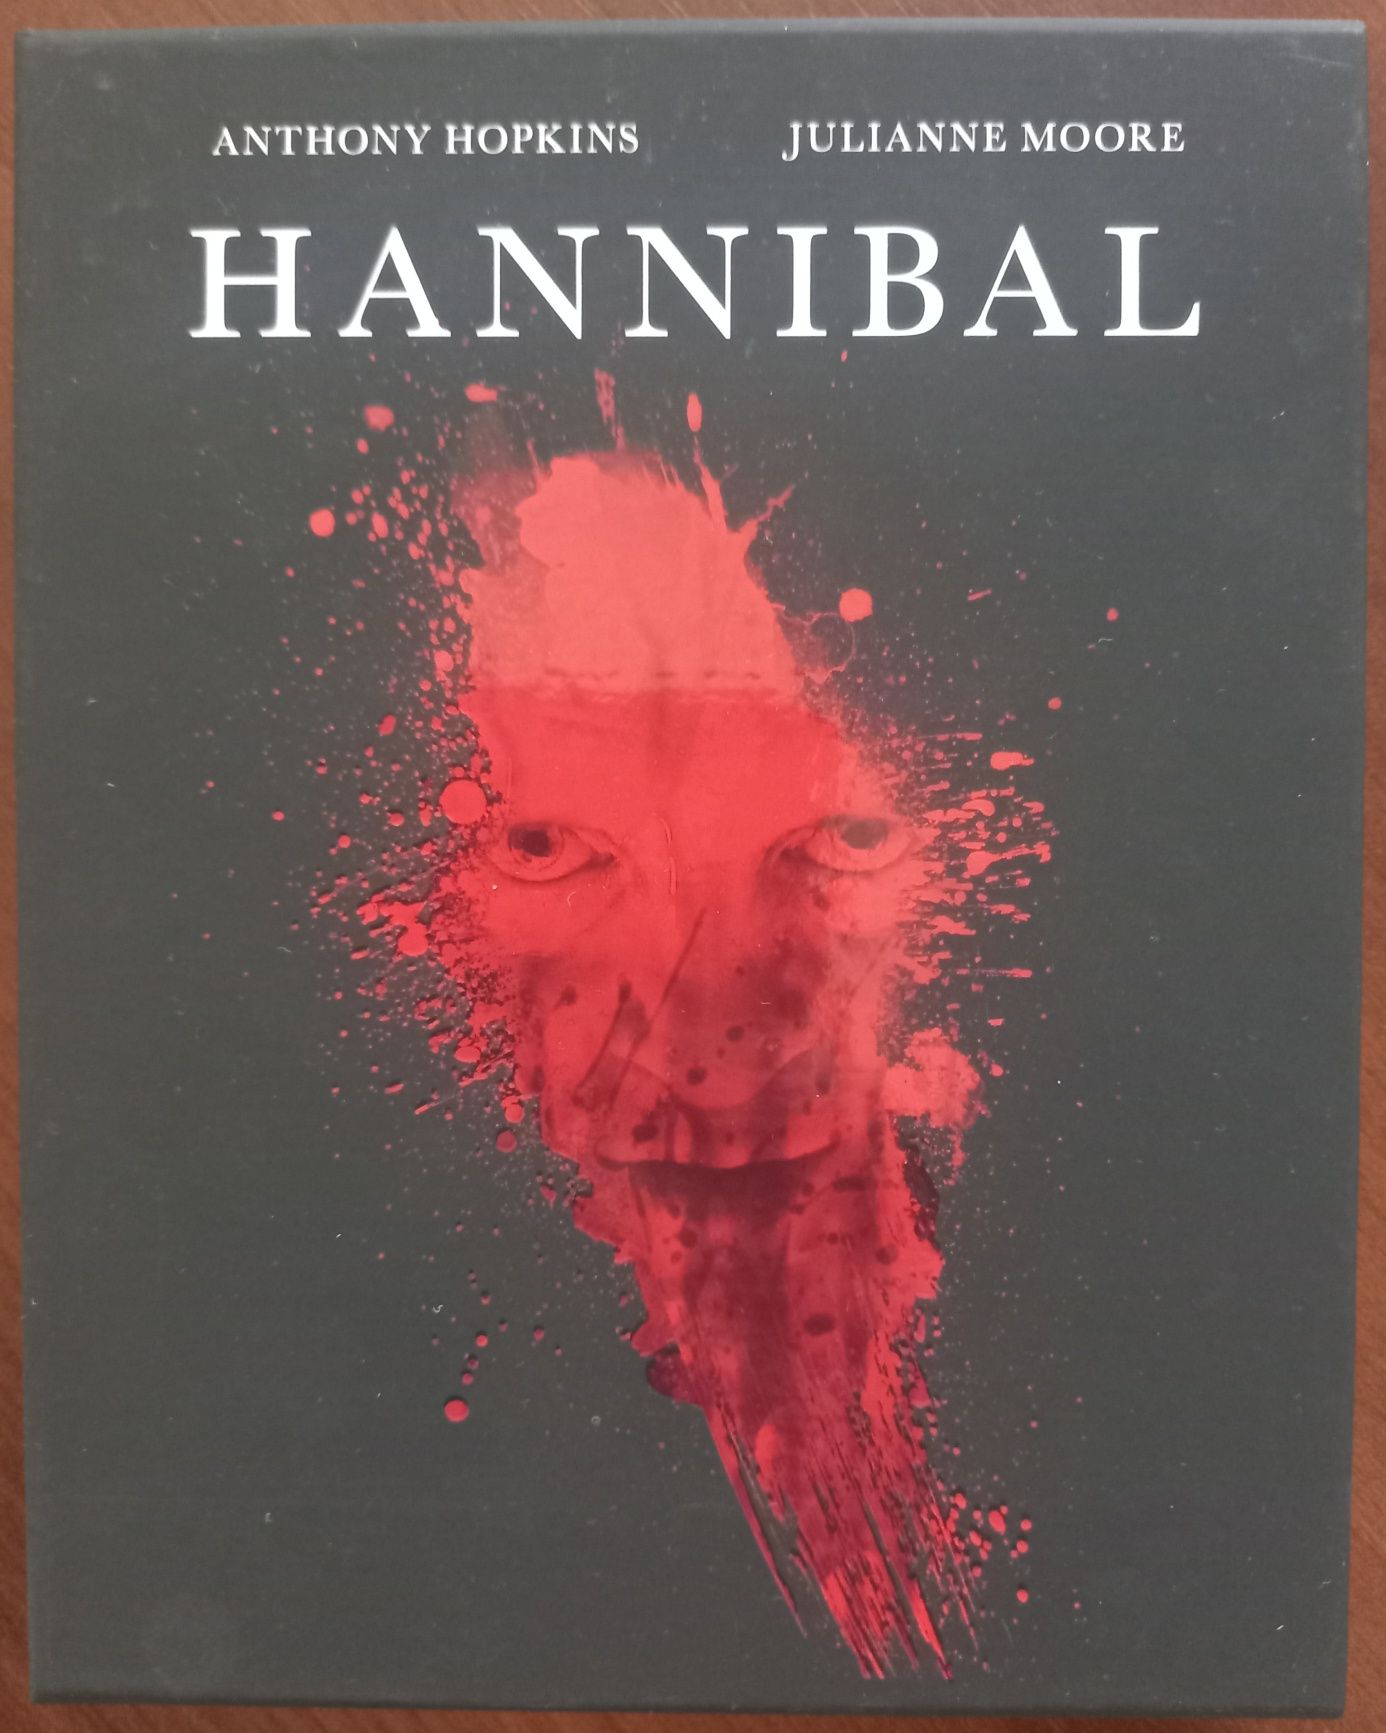 Hannibal 4K (2001)(1xBR 4K+1xBR) Limited Collector's Edition Steelbook